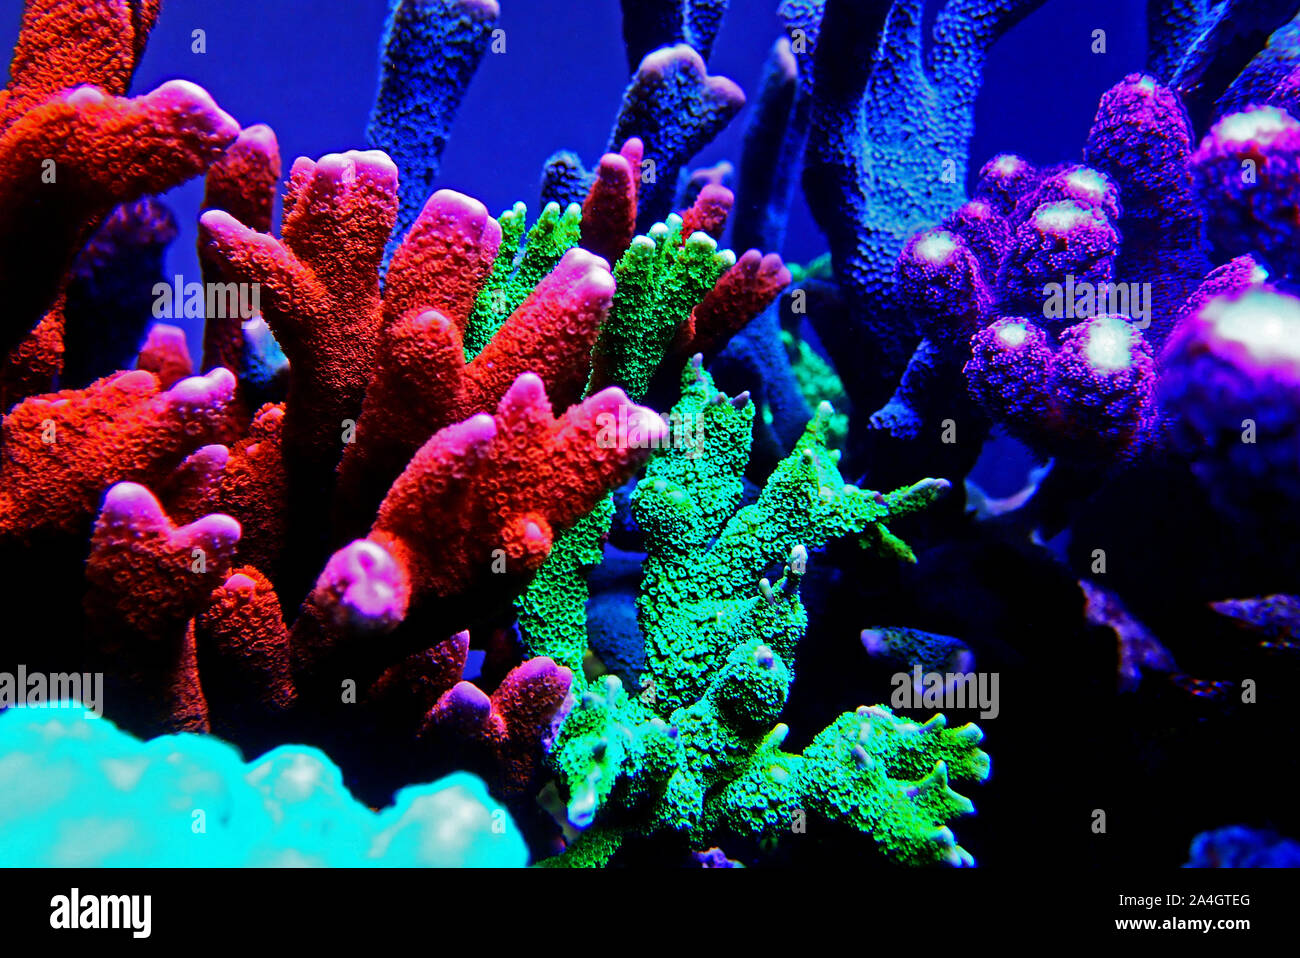 Montipora SPS coral in coral reef aquarium tank Stock Photo